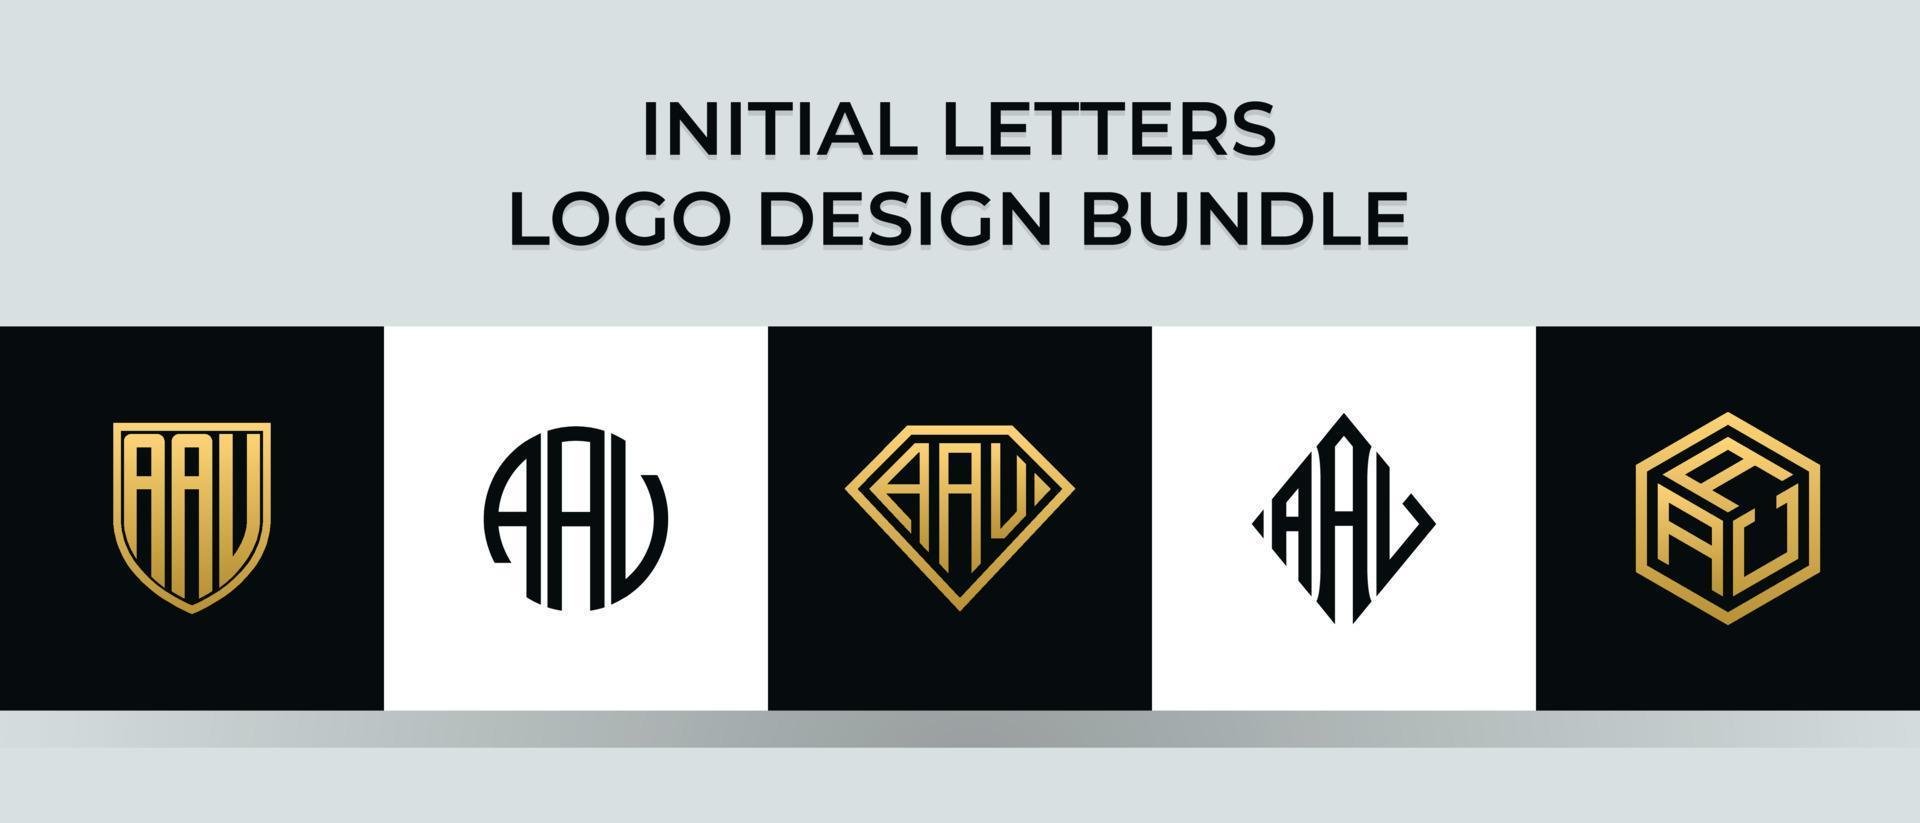 Initial letters AAV logo designs Bundle vector